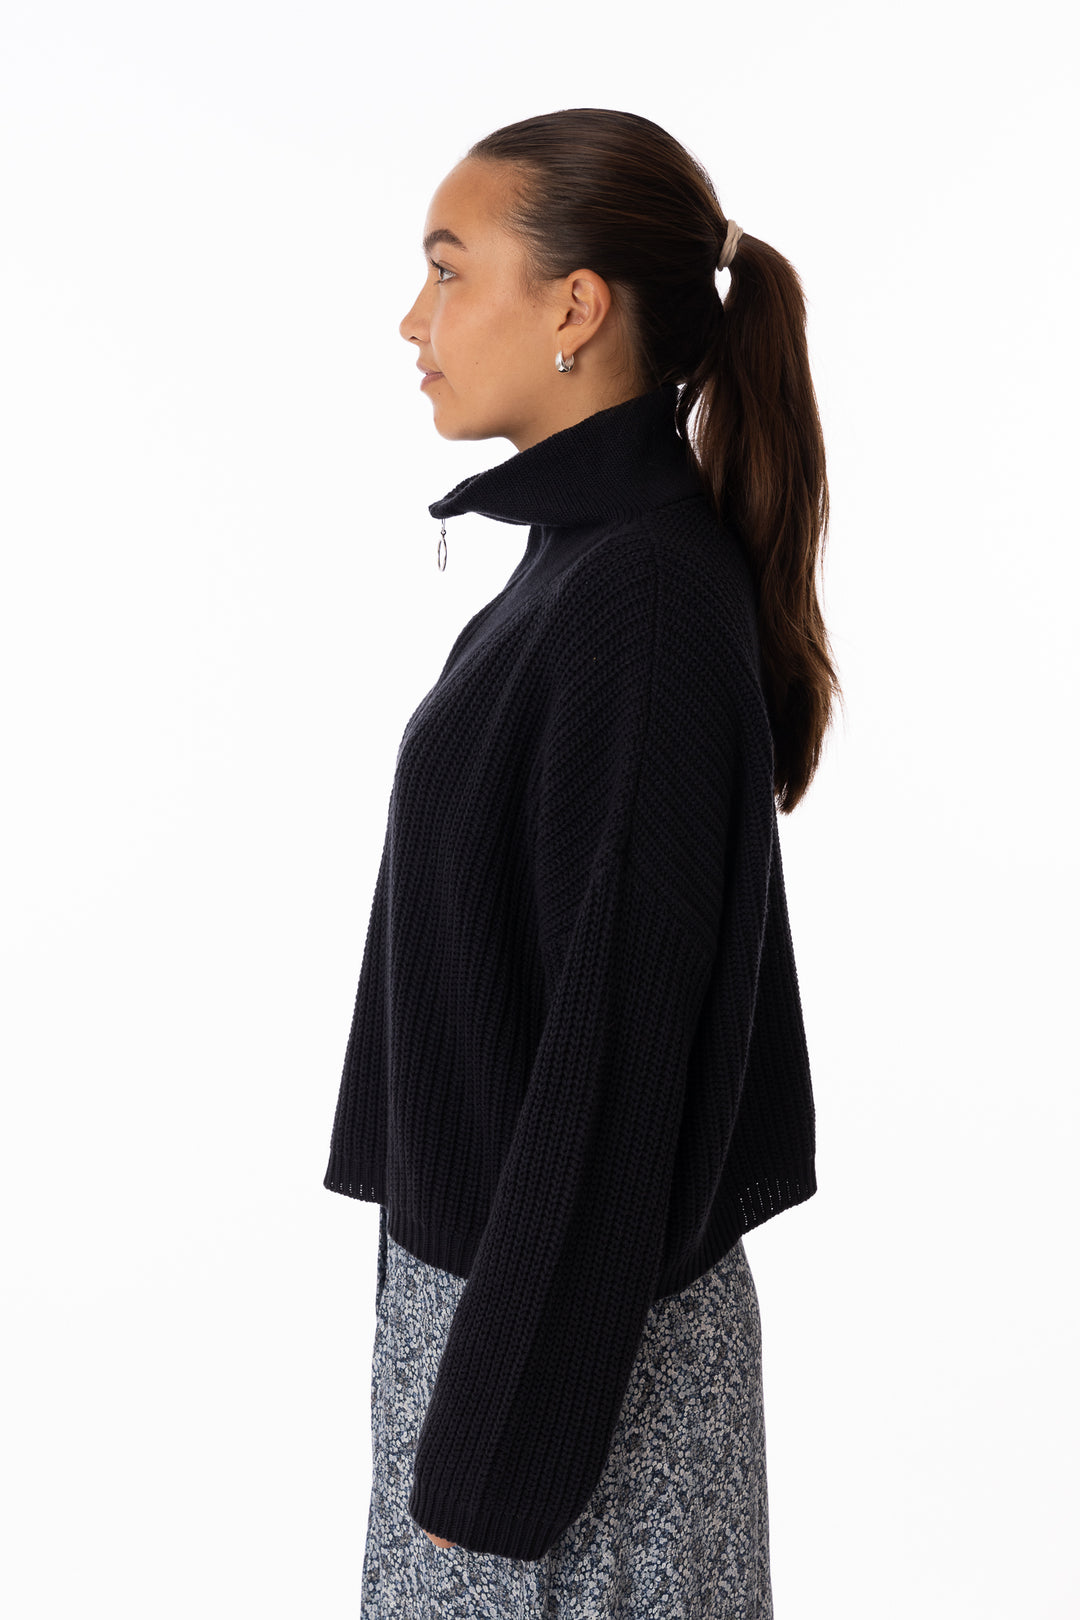 Florie Cotton Zip Knit Sweater-Dark Navy-Genser-Bogartstore